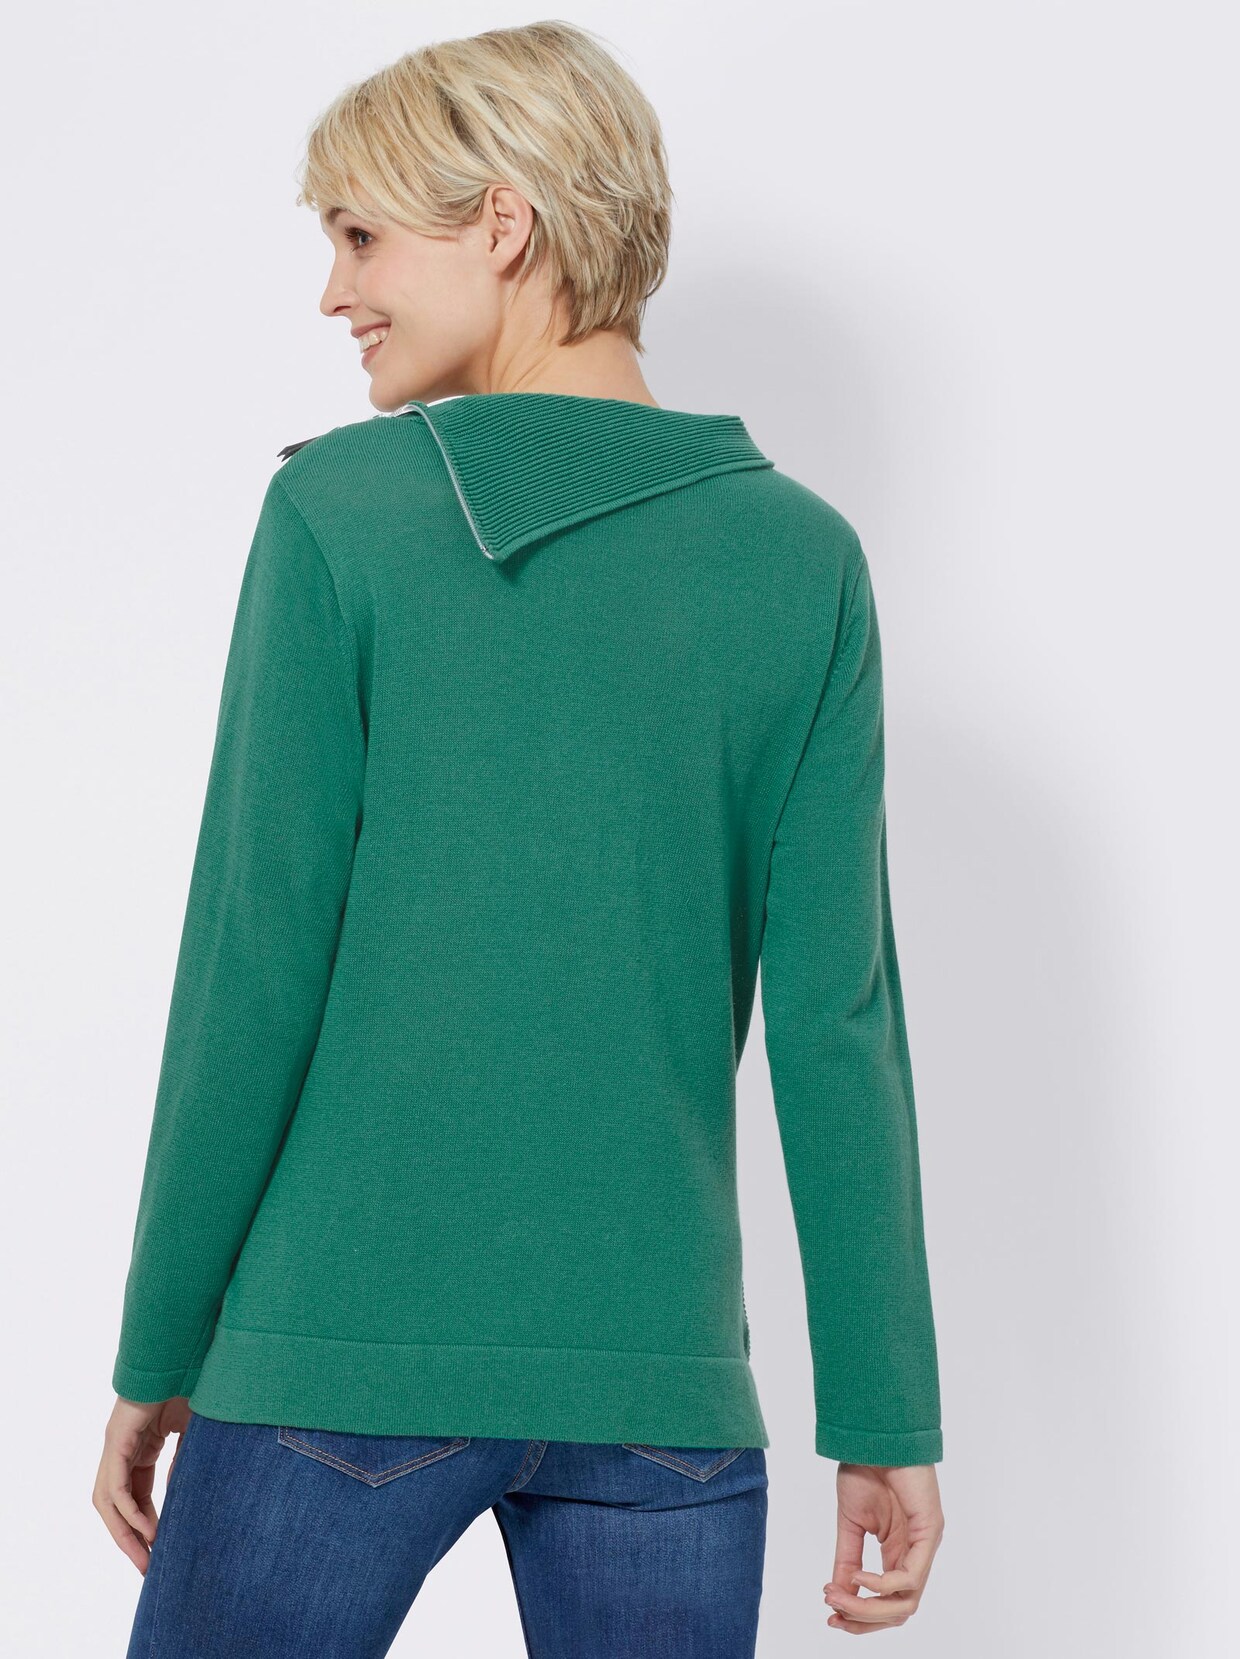 Langarm-Pullover - dunkelgrün